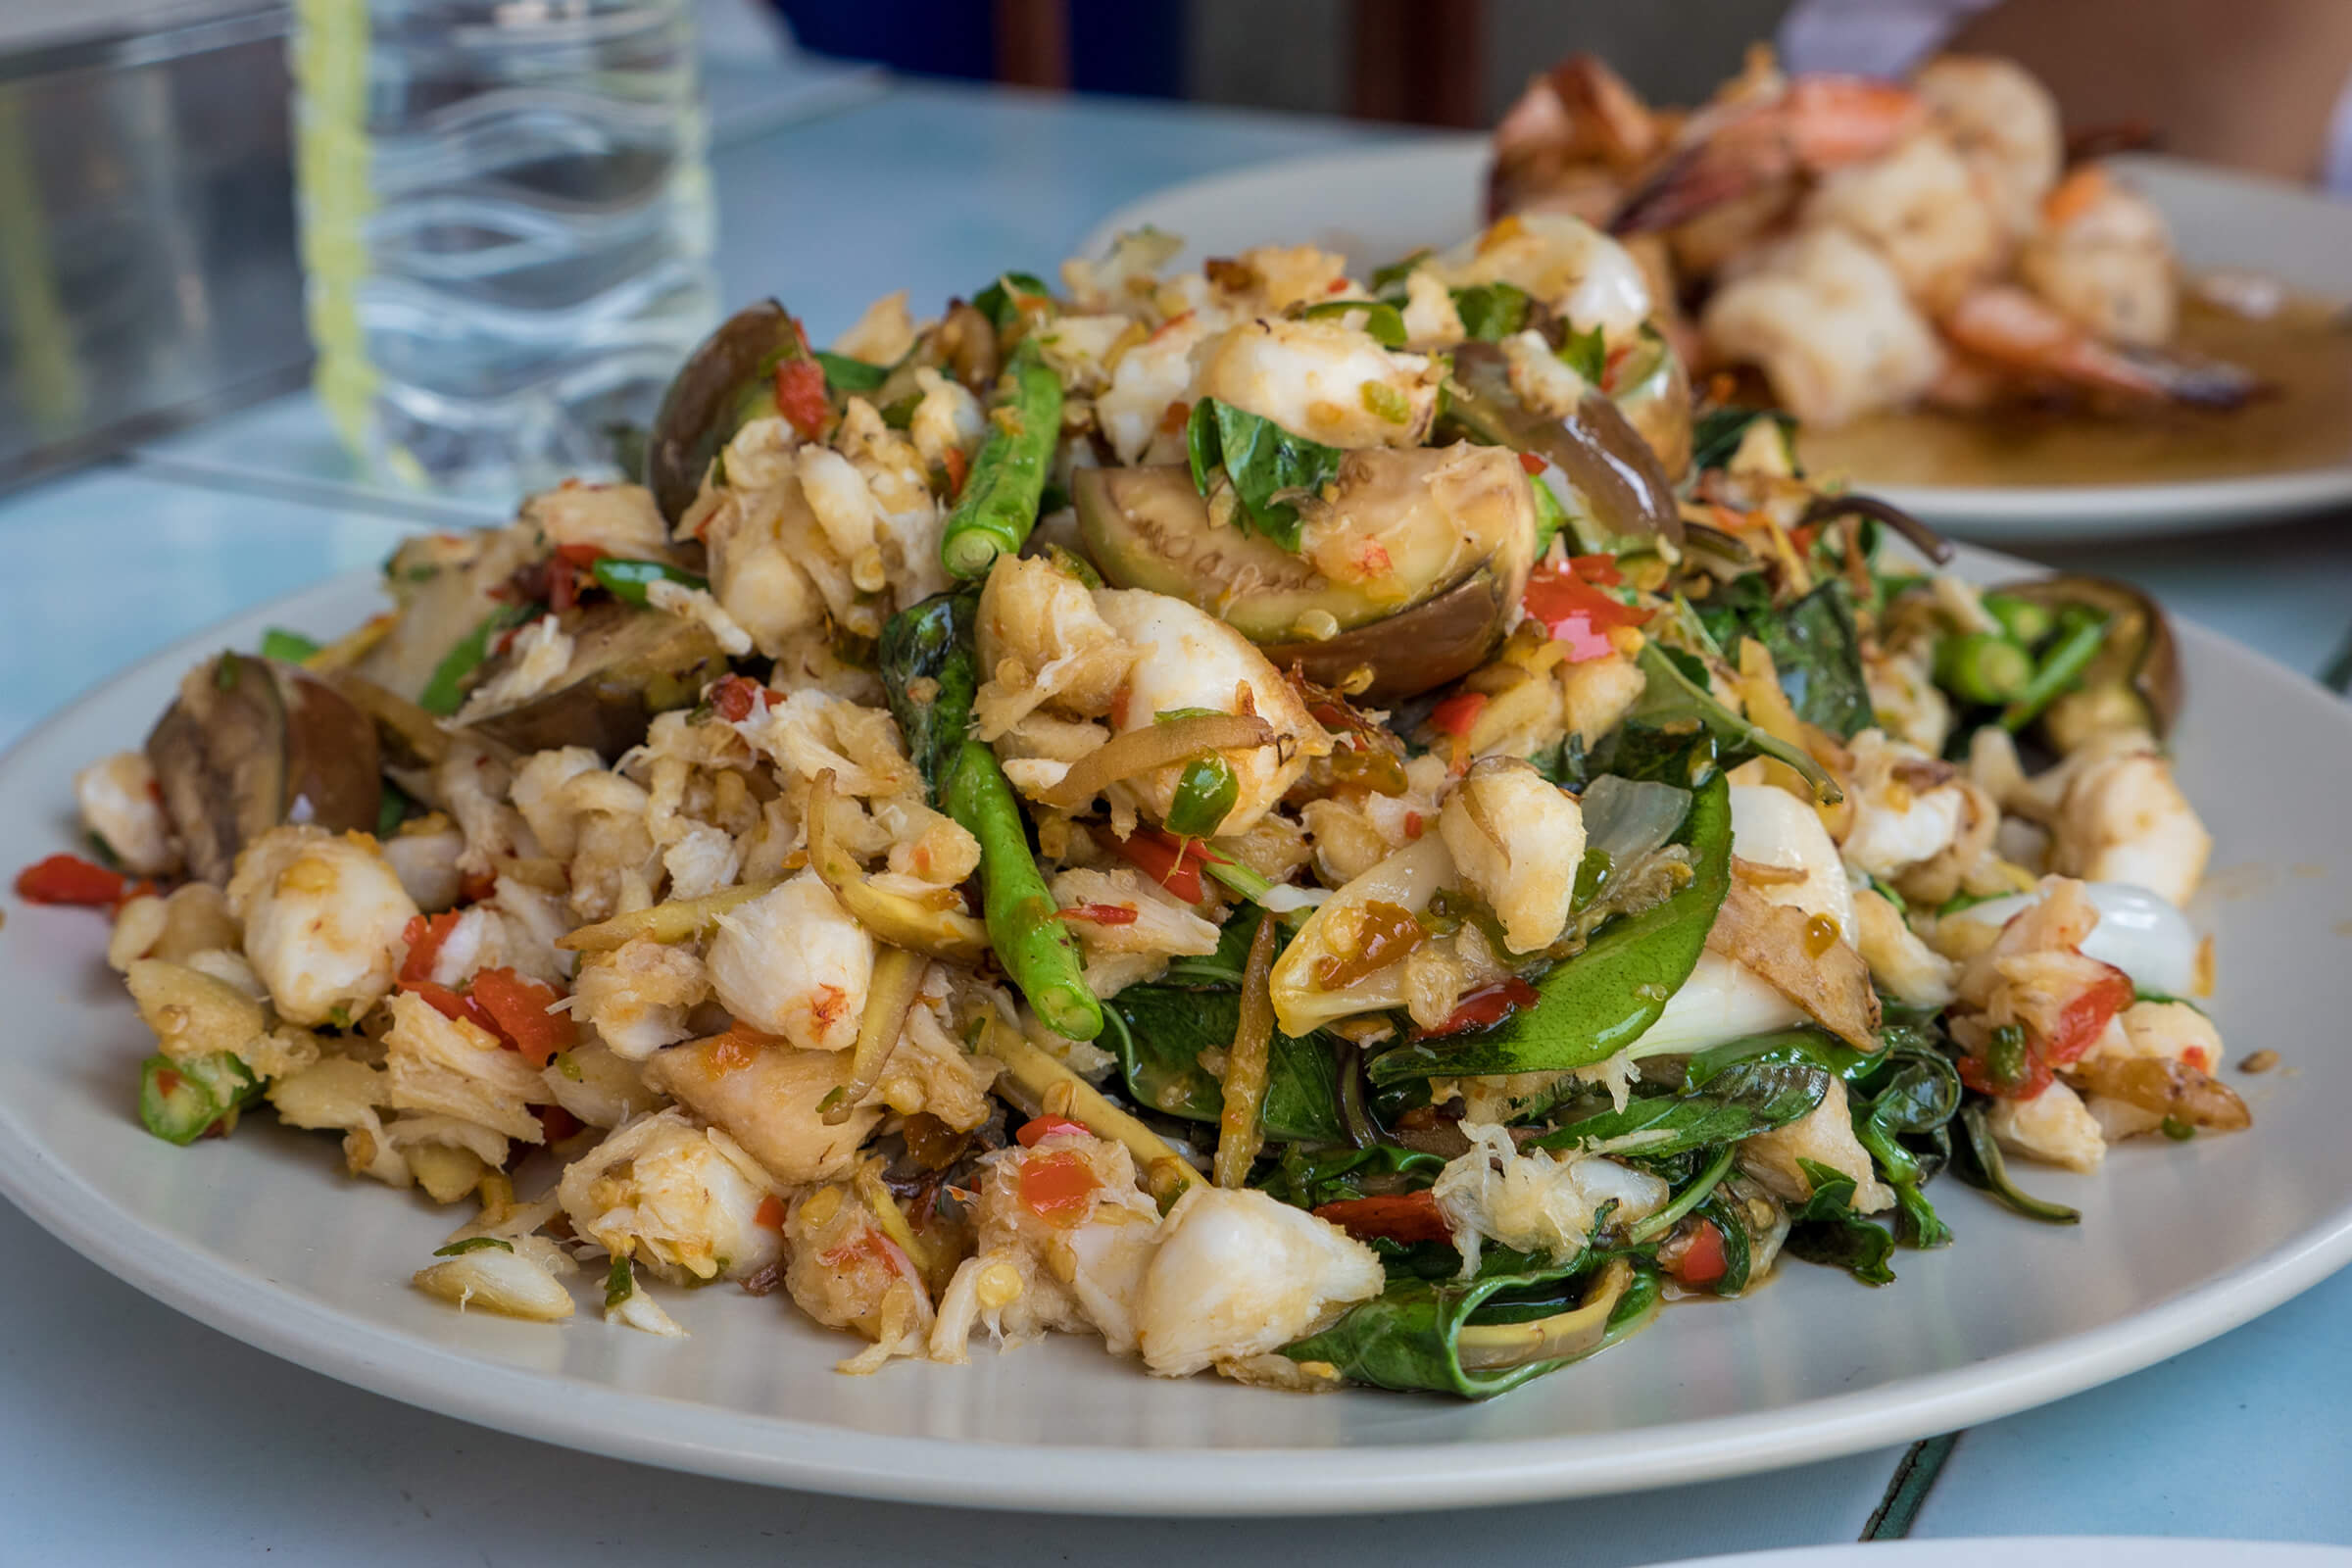 Thai Street Food of Your Dreams at Nhong Rim Klong (ร้าน หน่องริมคลอง)